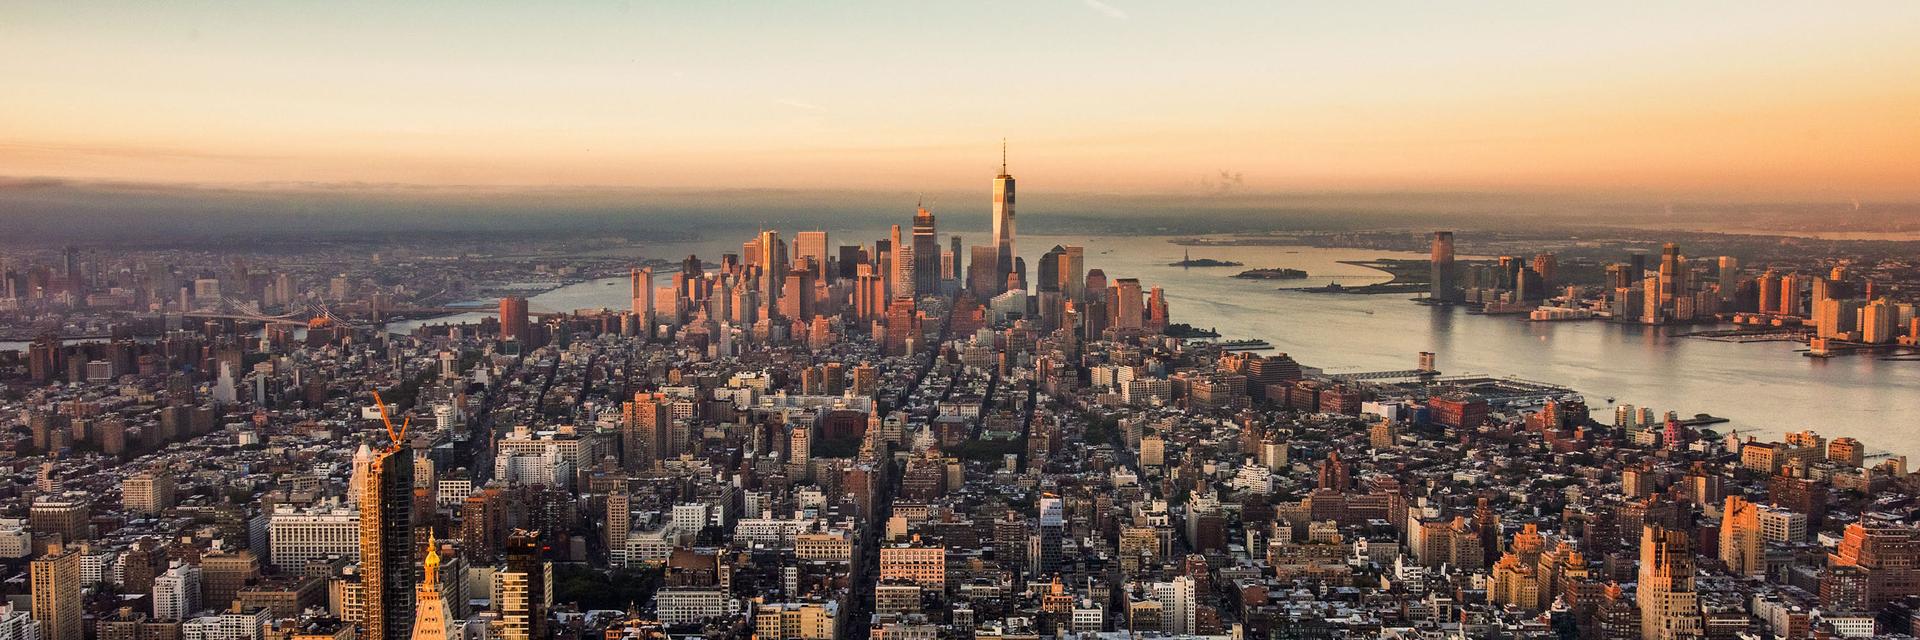 Skyline view of downtown Manhattan